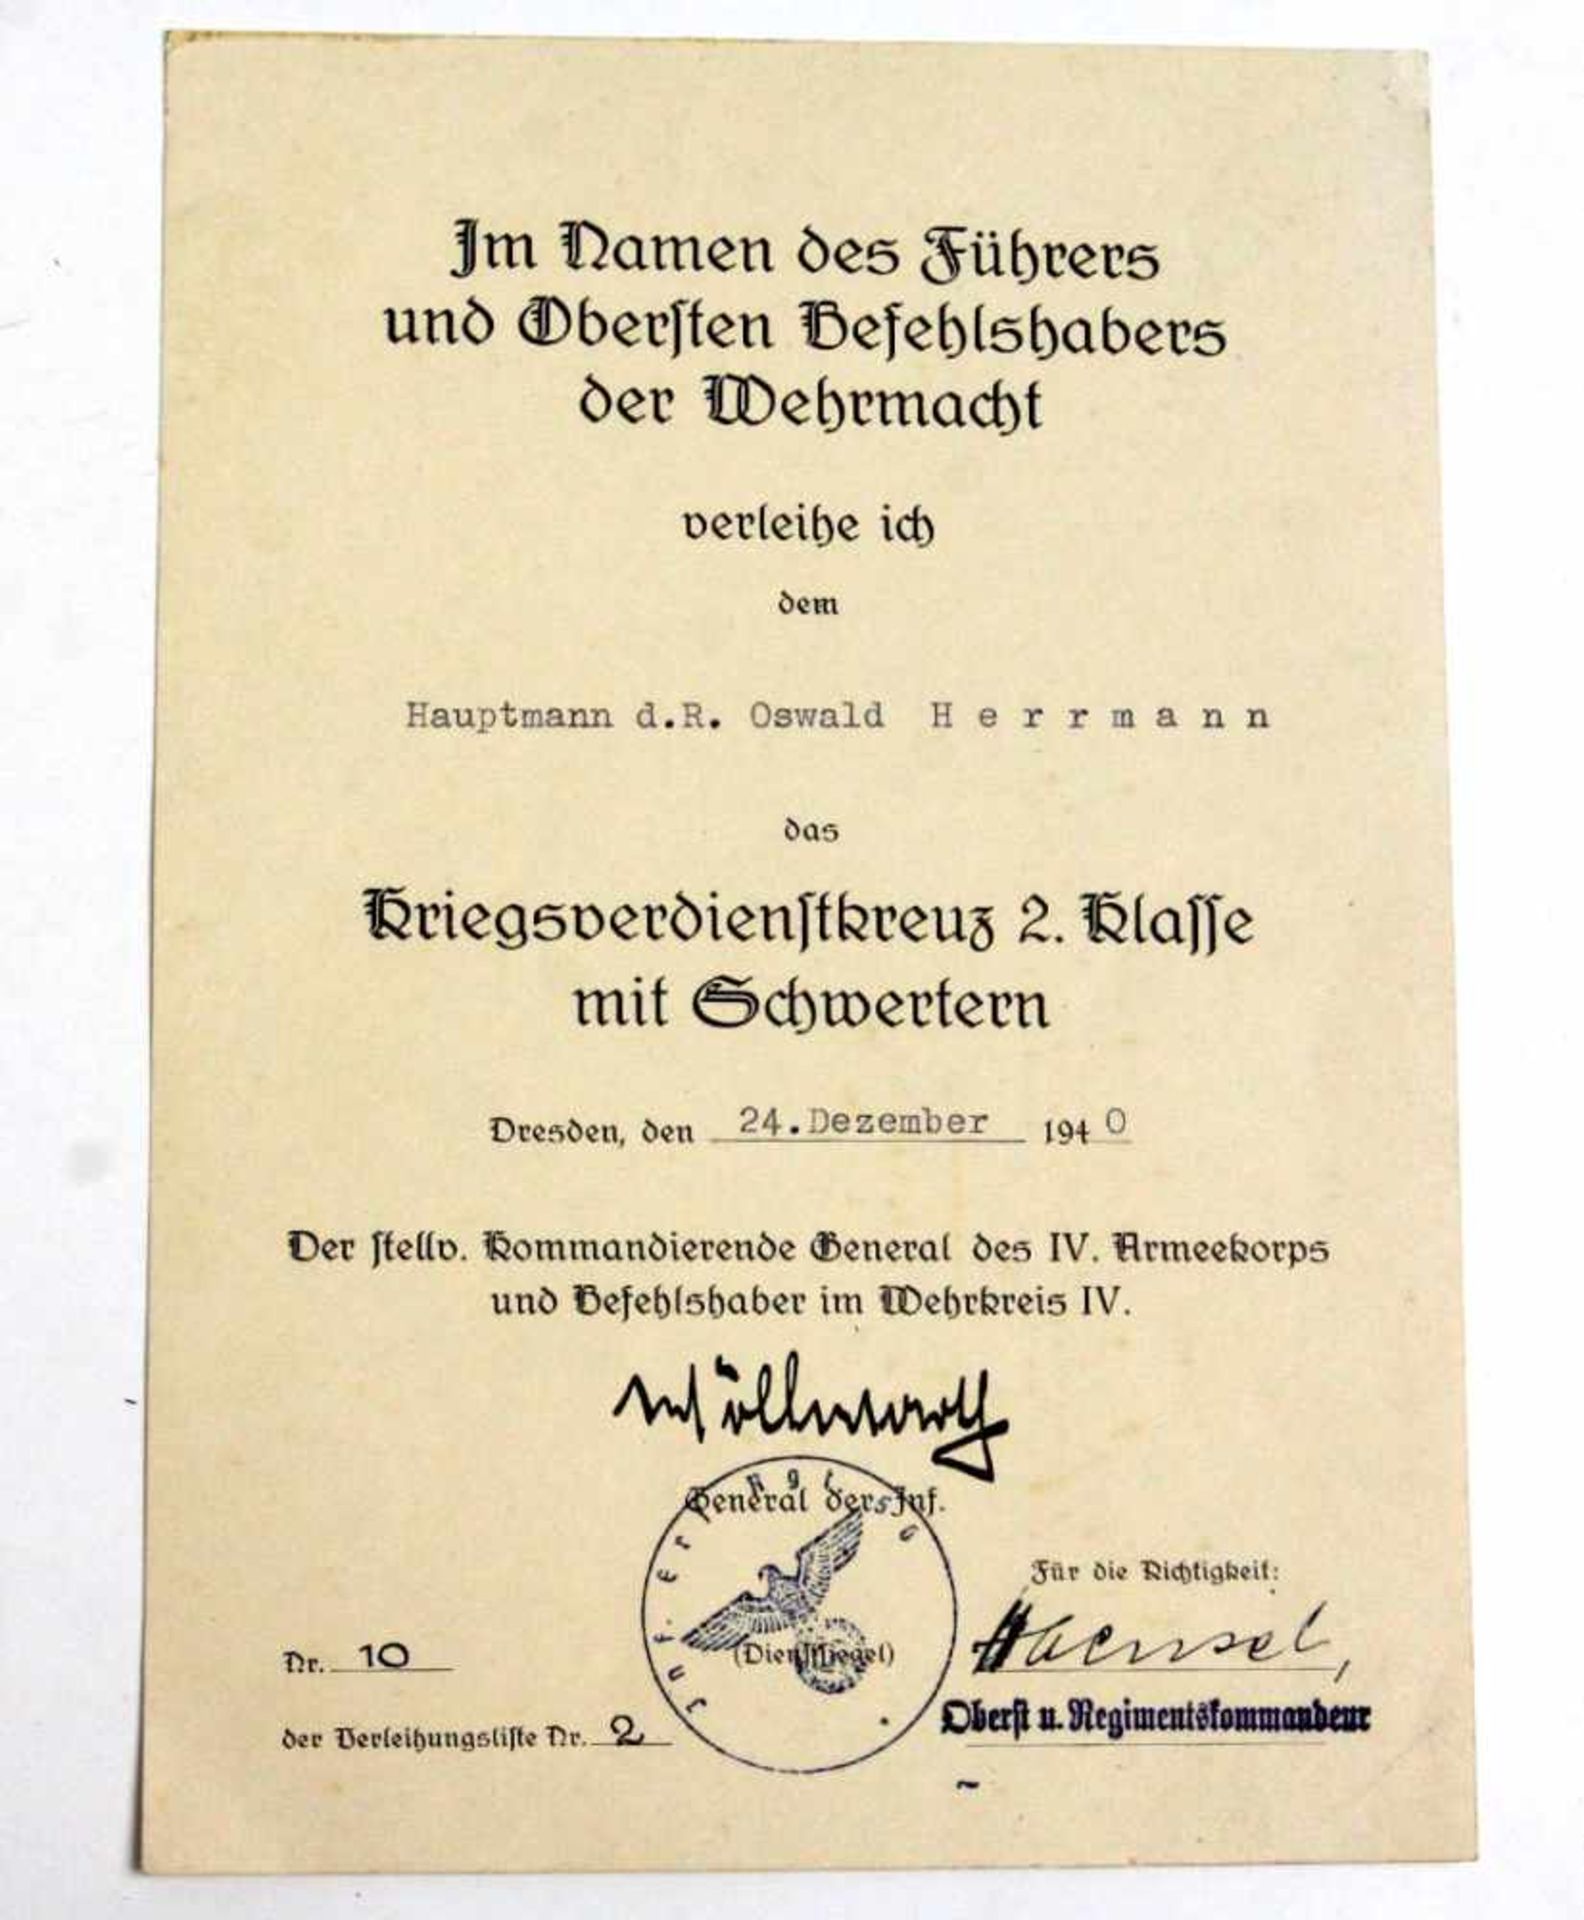 KVK Verleihungsurkunde 1940Verleihungsurkunde Kriegsverdiesntkreuz 2. Klasse mit Schwertern, Dresden